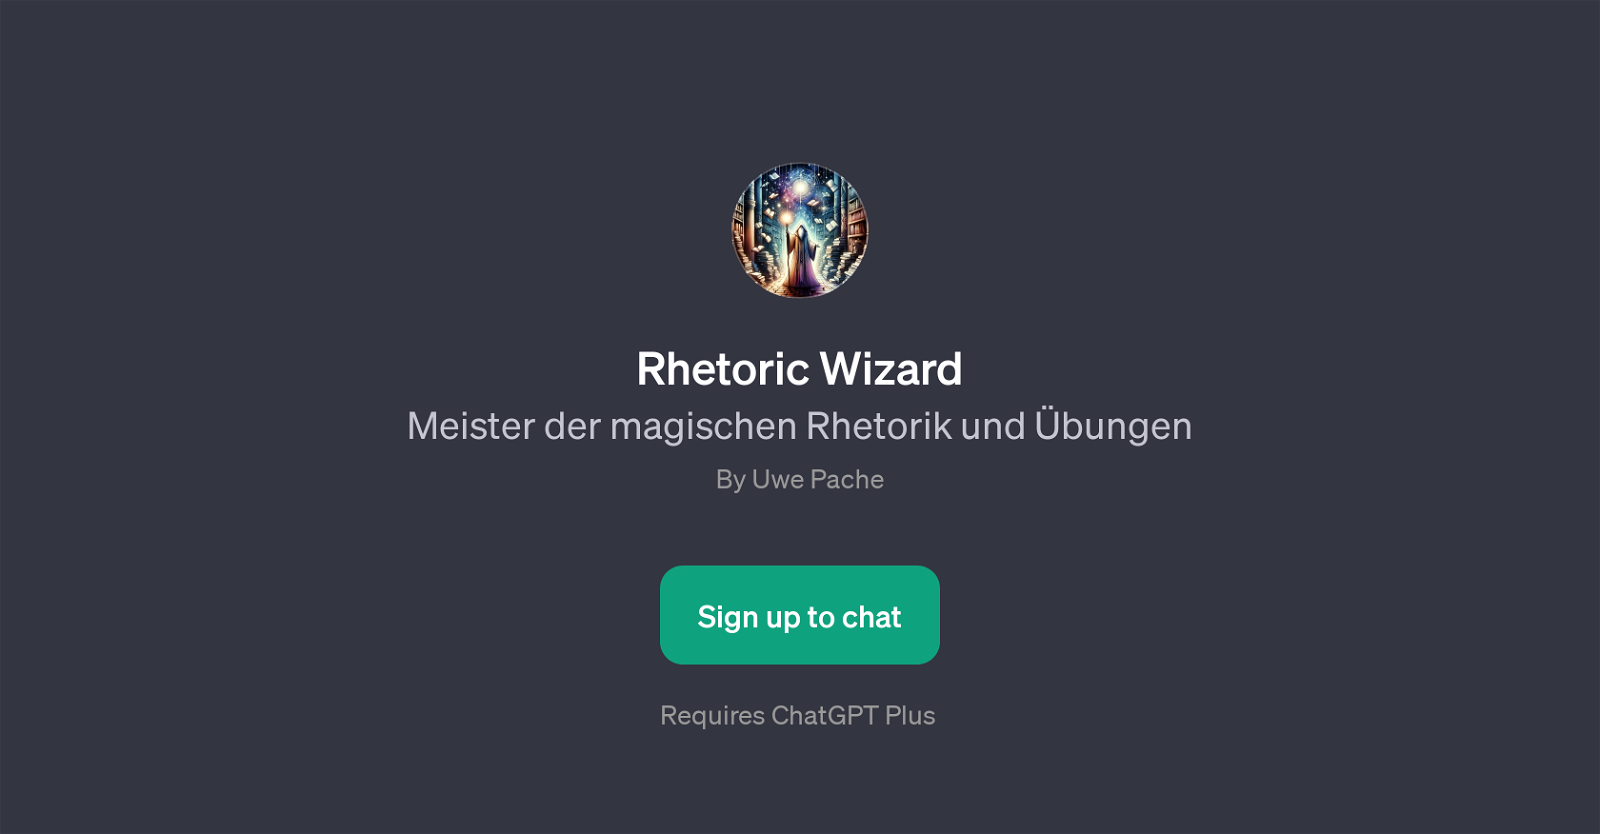 Rhetoric Wizard website